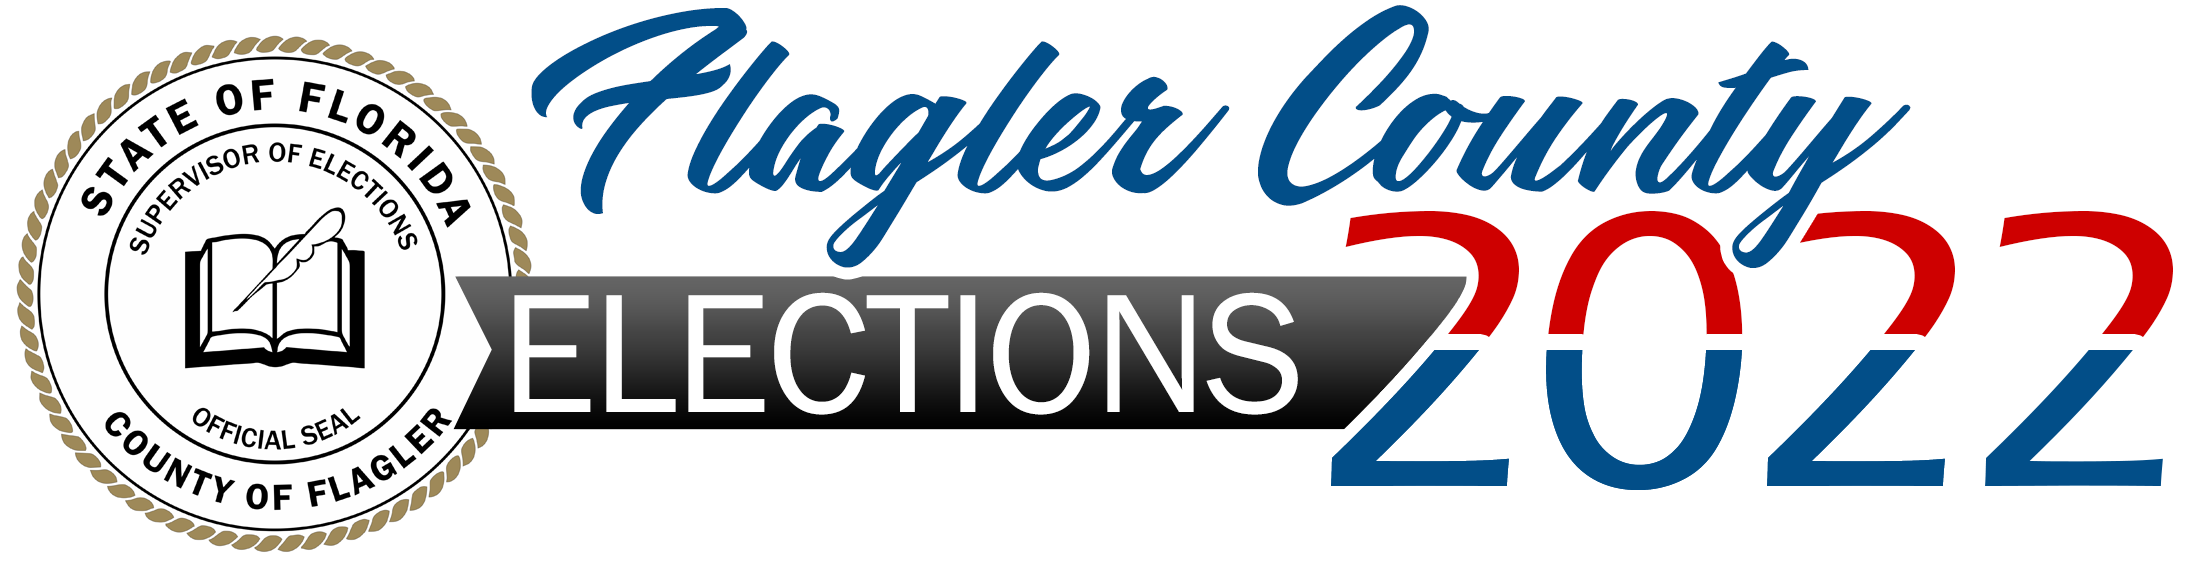 Flagler County 2022 Election Information